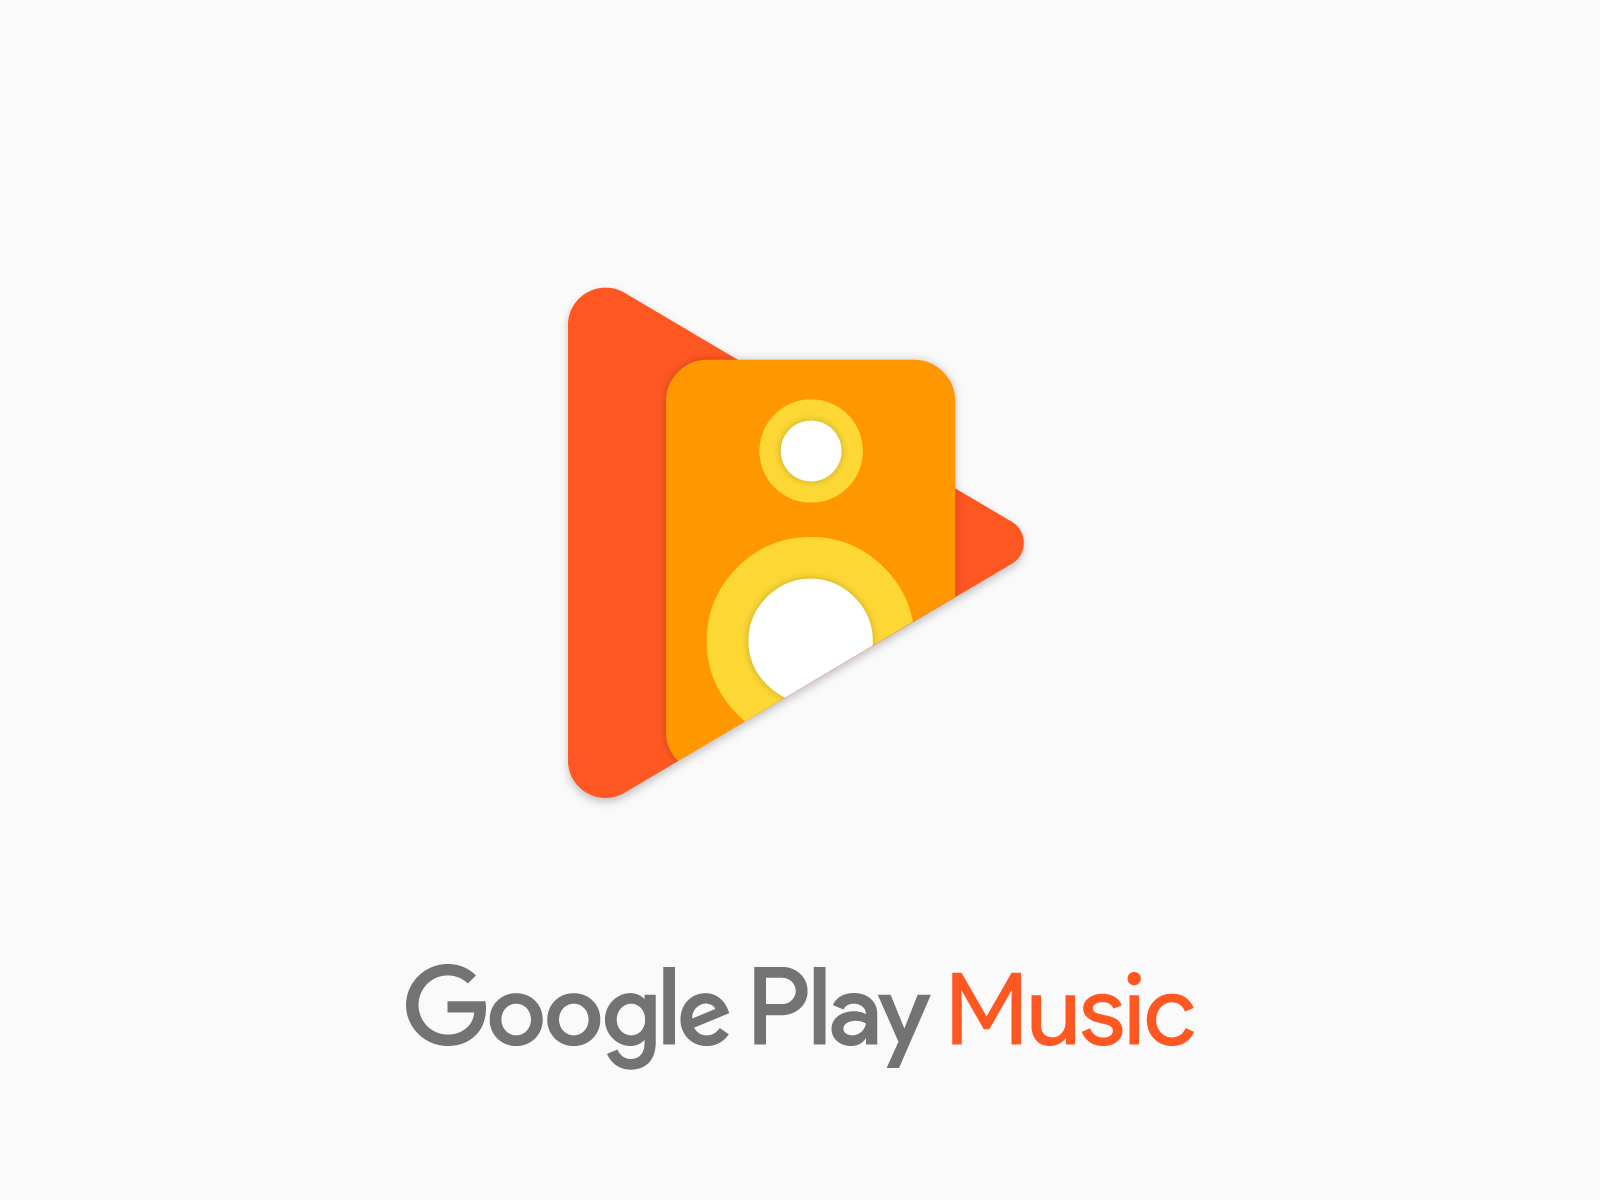 Google Play Music Redesign